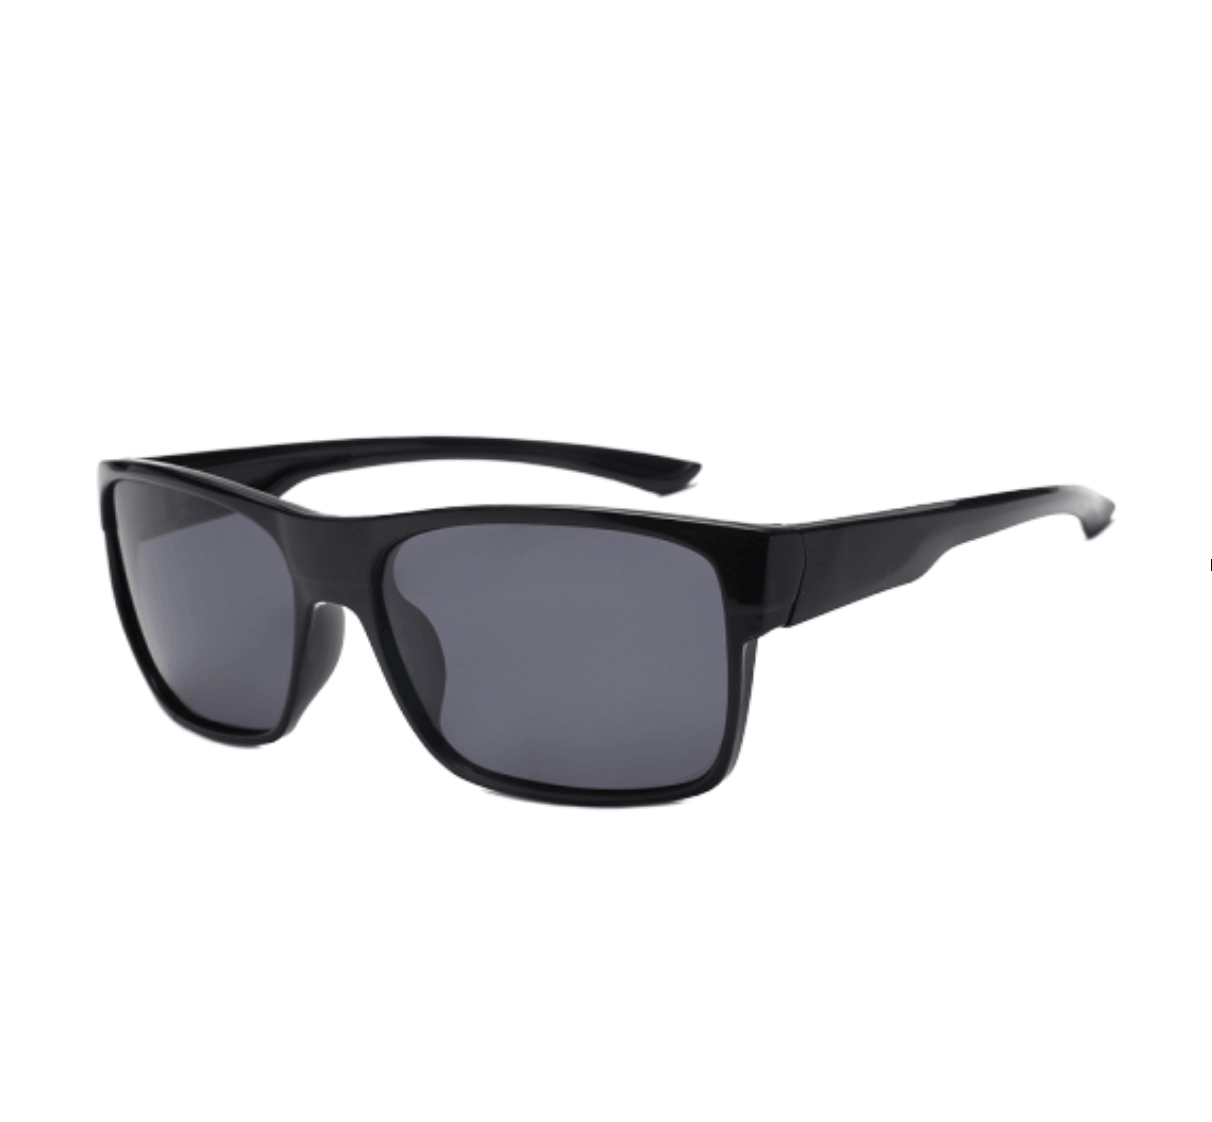 Sports Sunglasses Manufacturers - Sunglasses Supplier China_Wayfarer Sunglasses